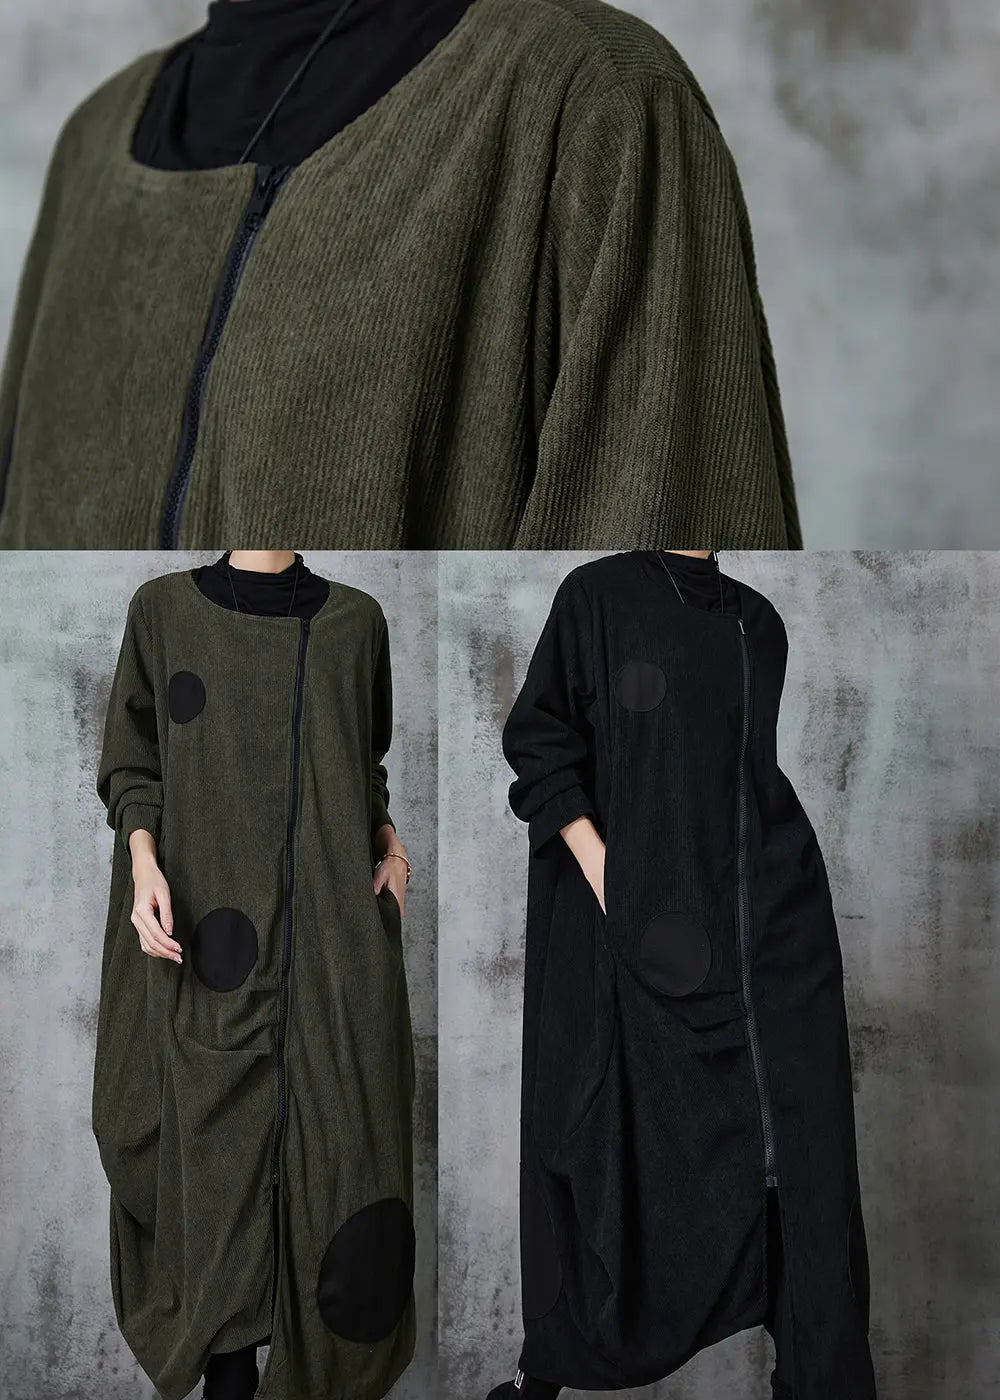 Blackish Green Dot Cotton Trench Coat Asymmetrical Spring Ada Fashion